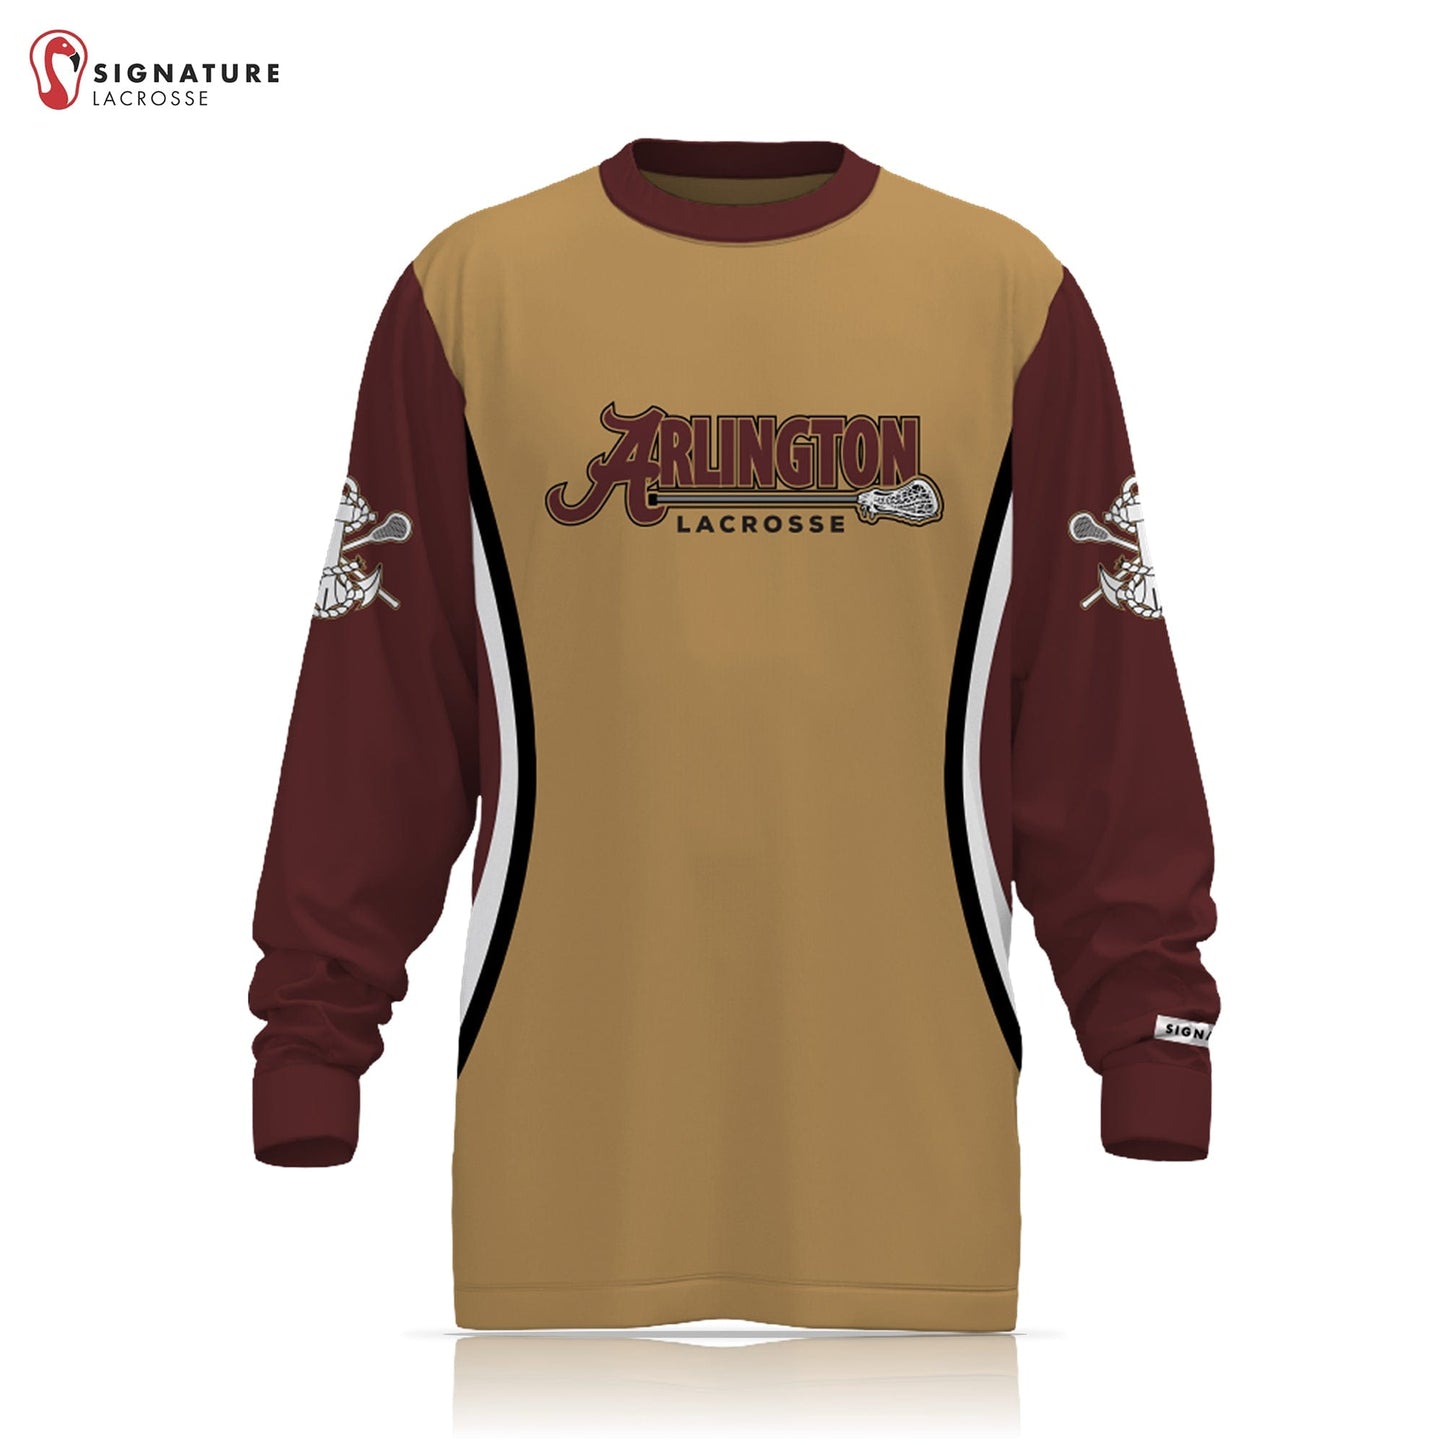 Arlington Lagrange Lacrosse Men's Long Sleeve Shooter Shirt: 7-8 Signature Lacrosse